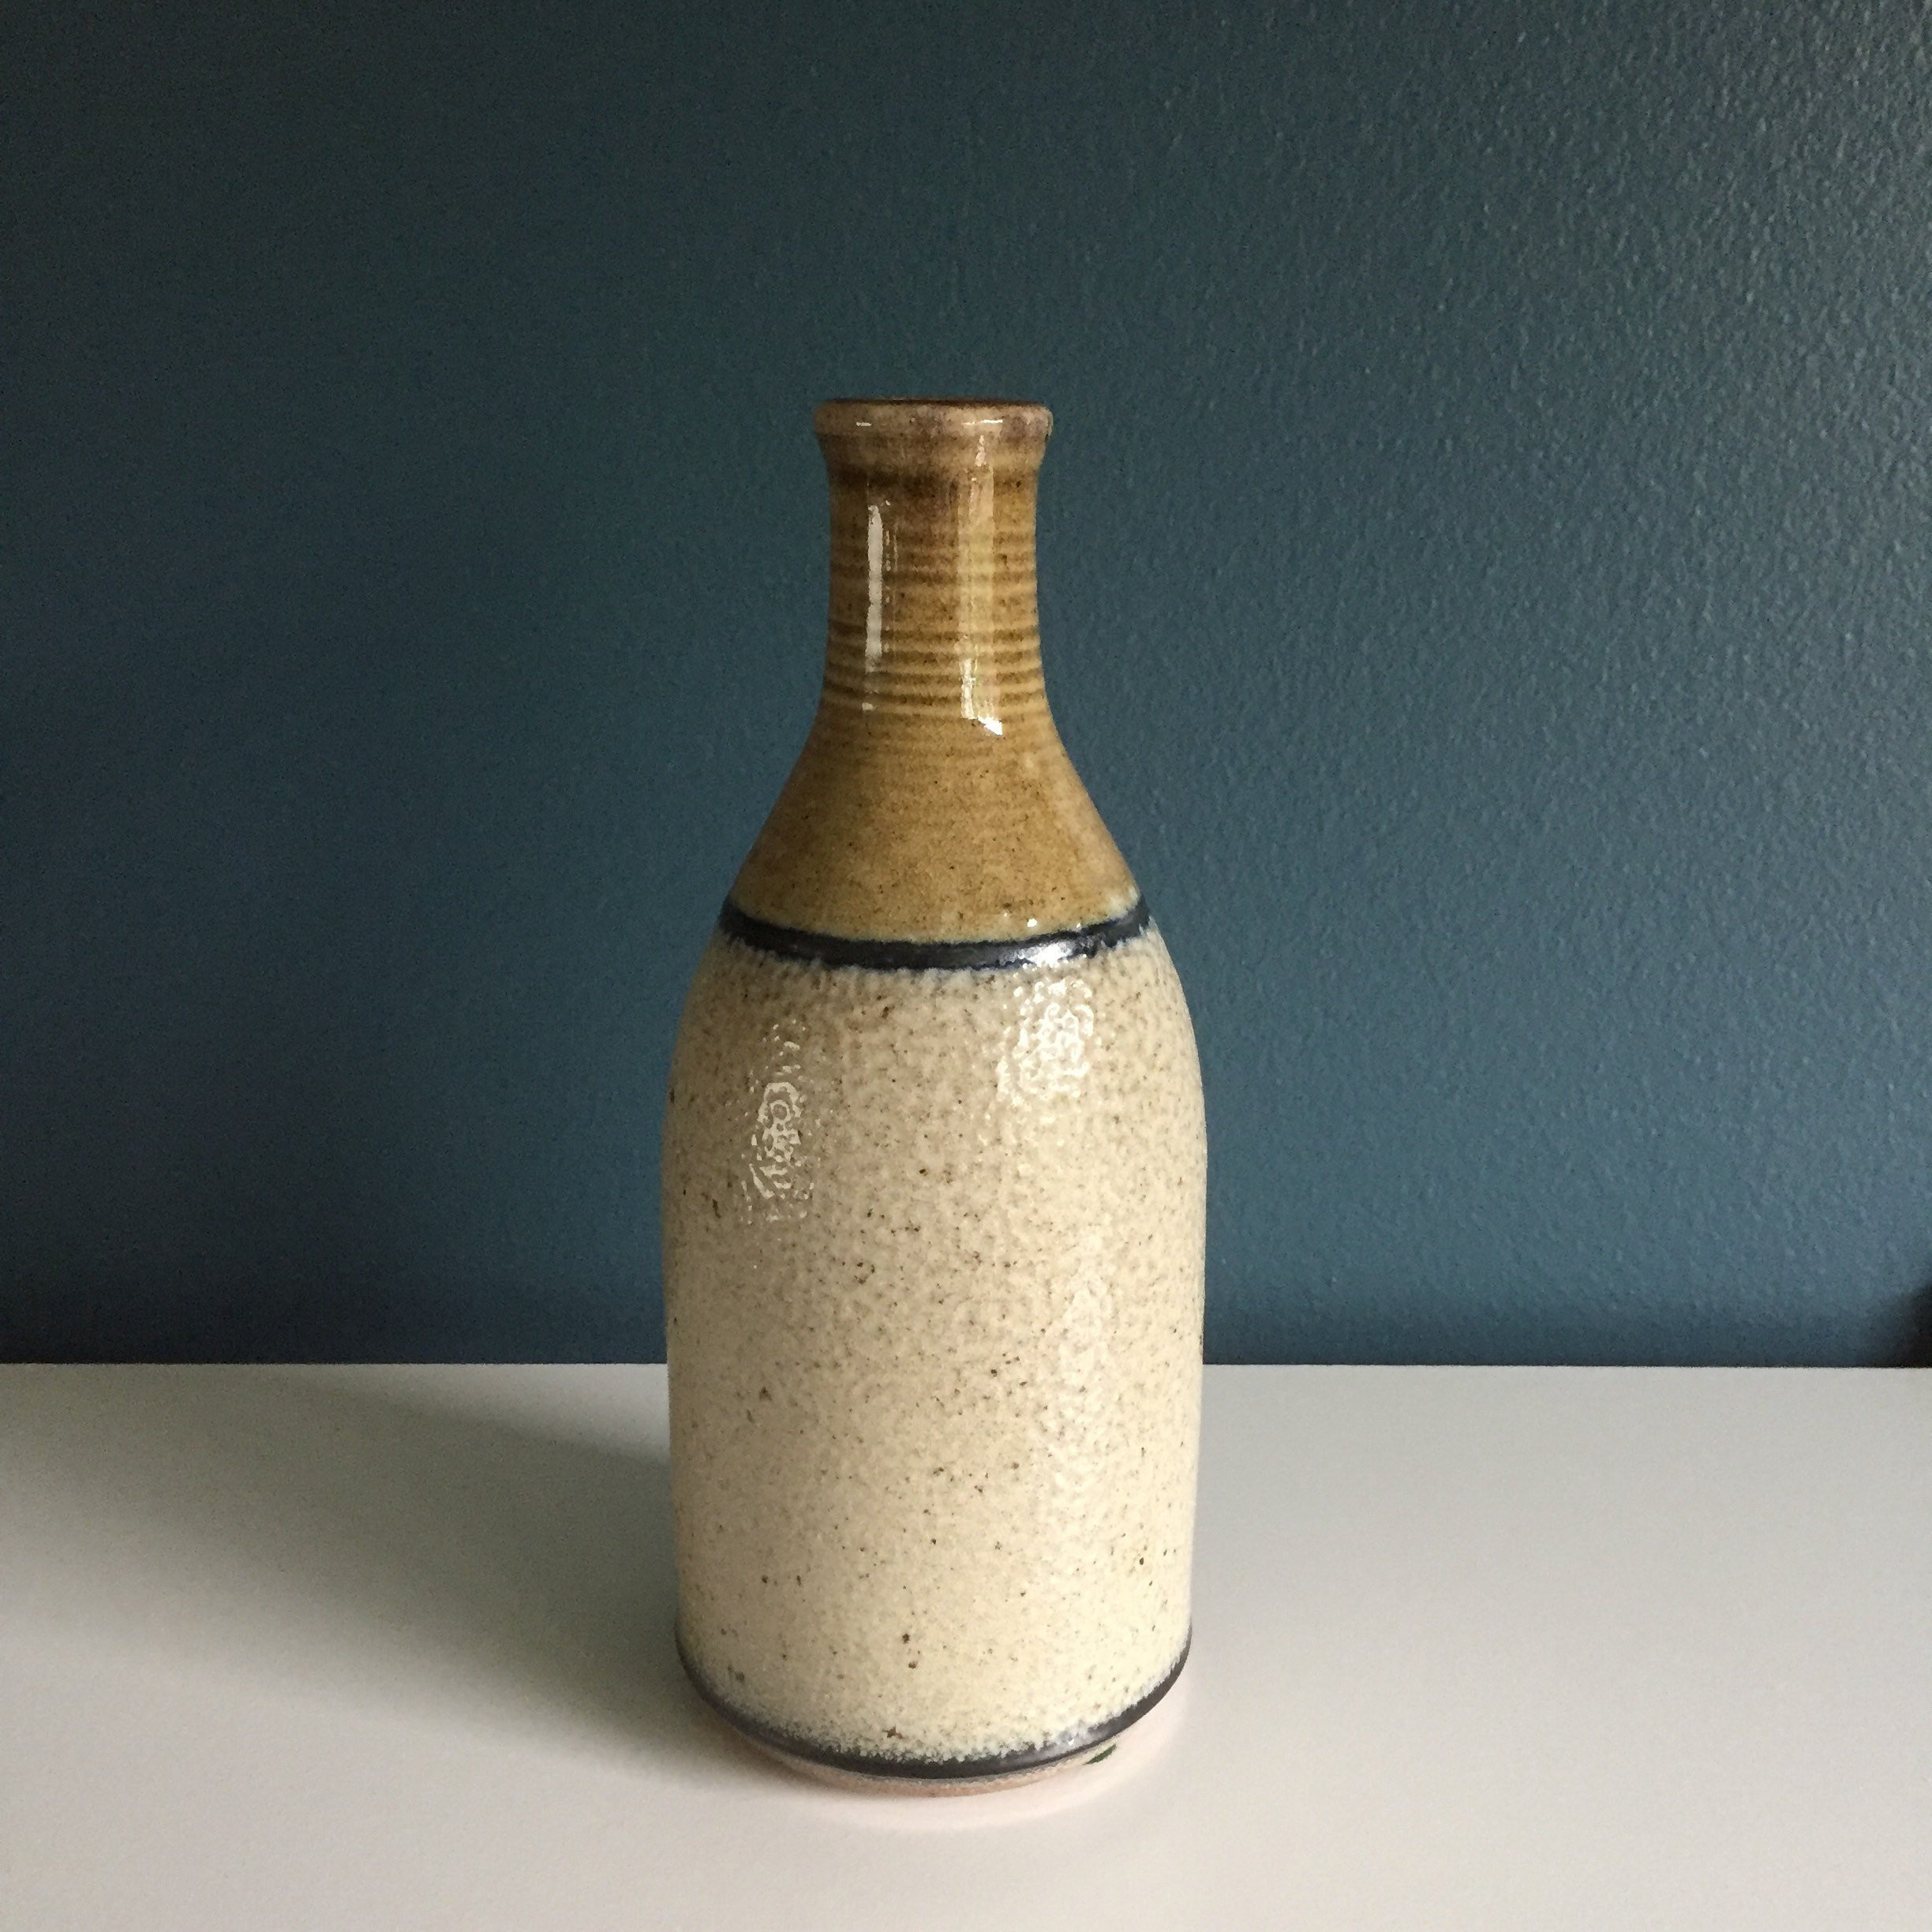 blown glass vases for sale of jeff procter studio pottery vase vintage oregon pottery for dzoom